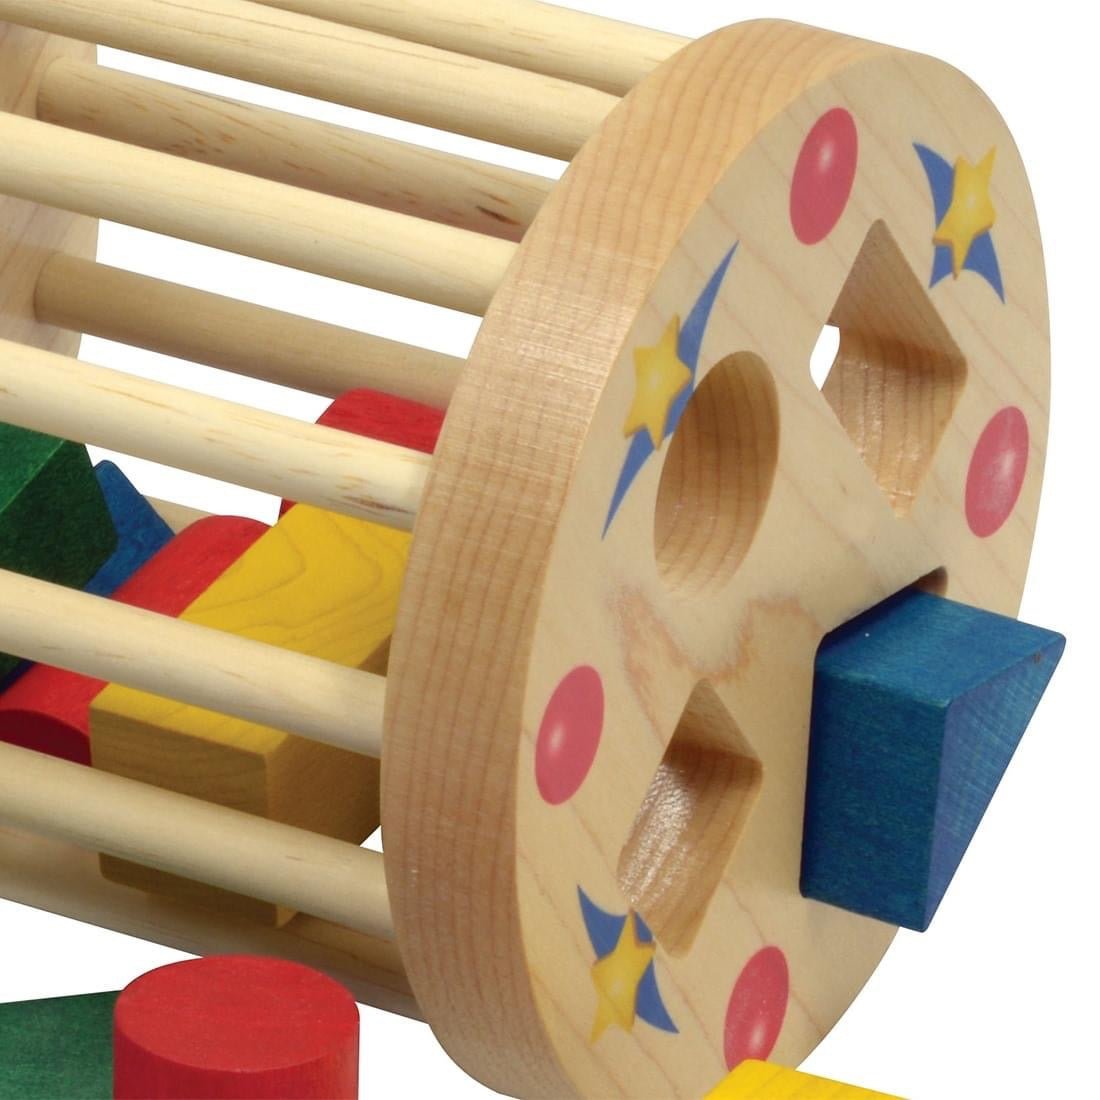 heirloom wooden Montessori shape sorter toy close